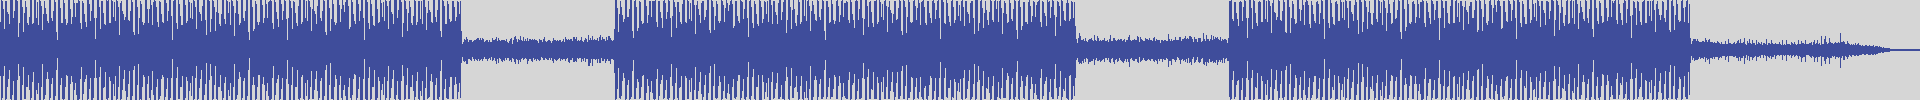 nf_boyz_records [NFY018] Spencer D - Plastik [Expo] audio wave form